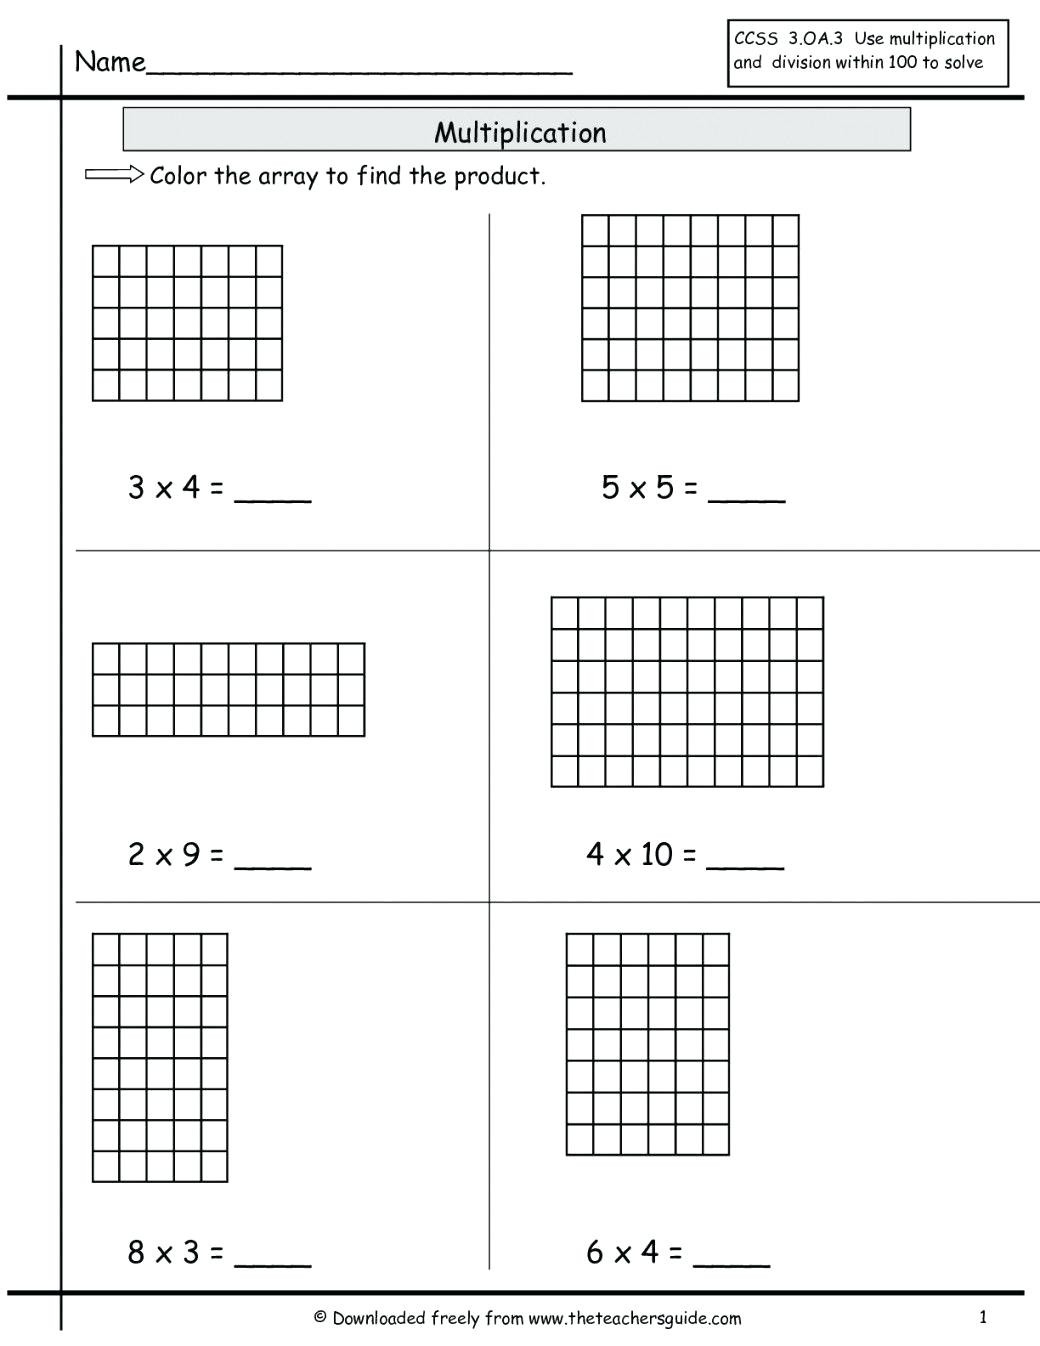 box method multiplication math multiplication box grid help db excelcom